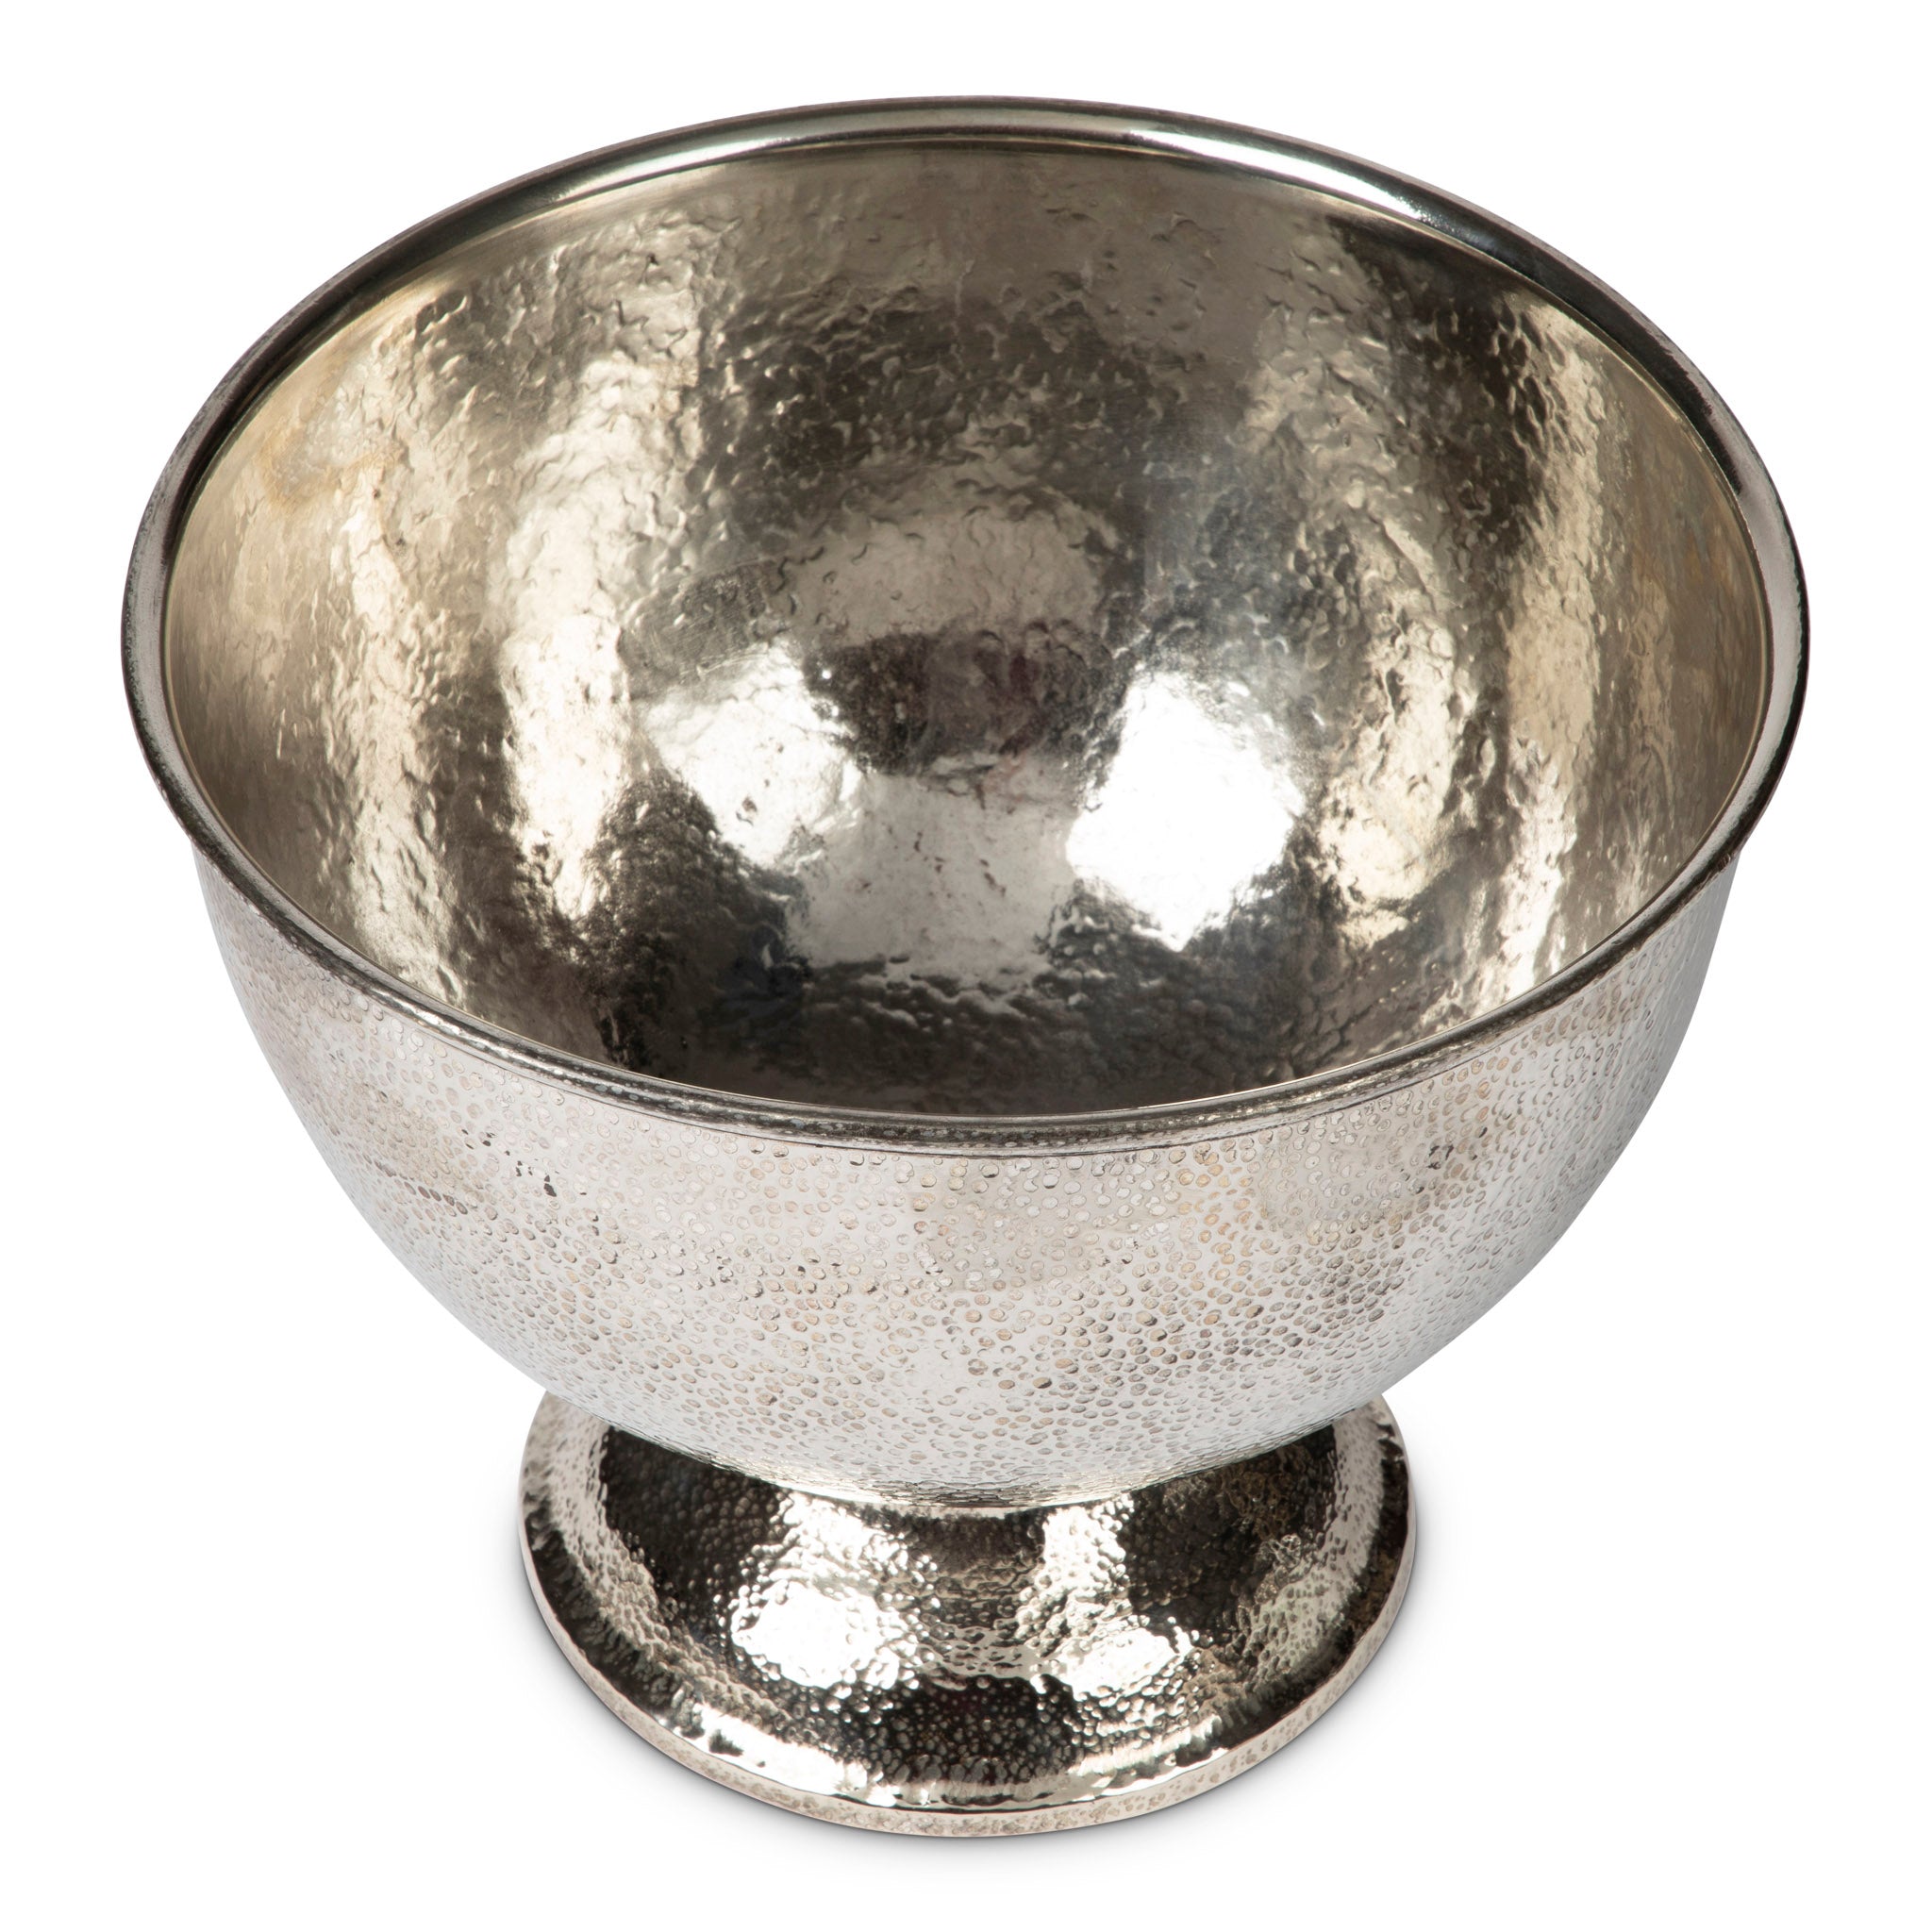 Joseph Heinrichs Hammered Silver Champagne Bowl